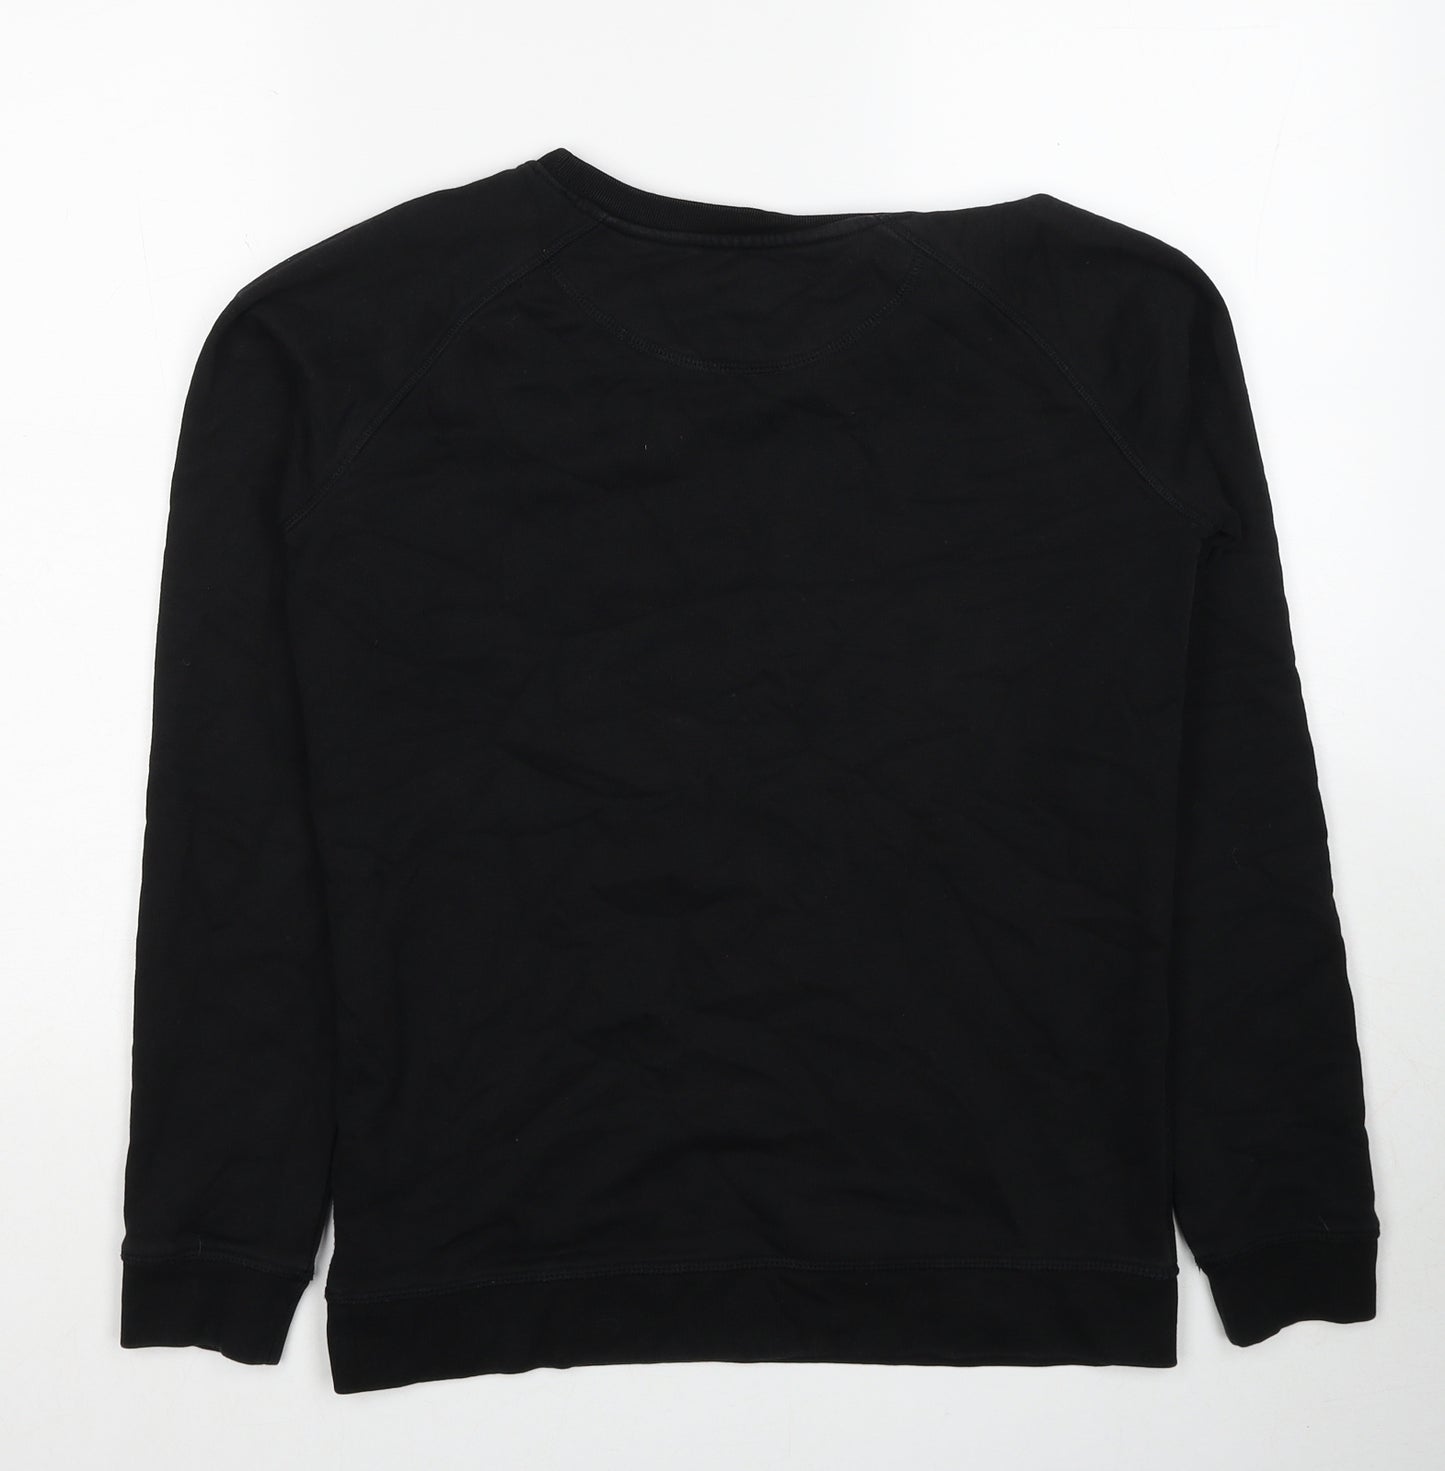 Follow The River Mens Black Cotton Pullover Sweatshirt Size S